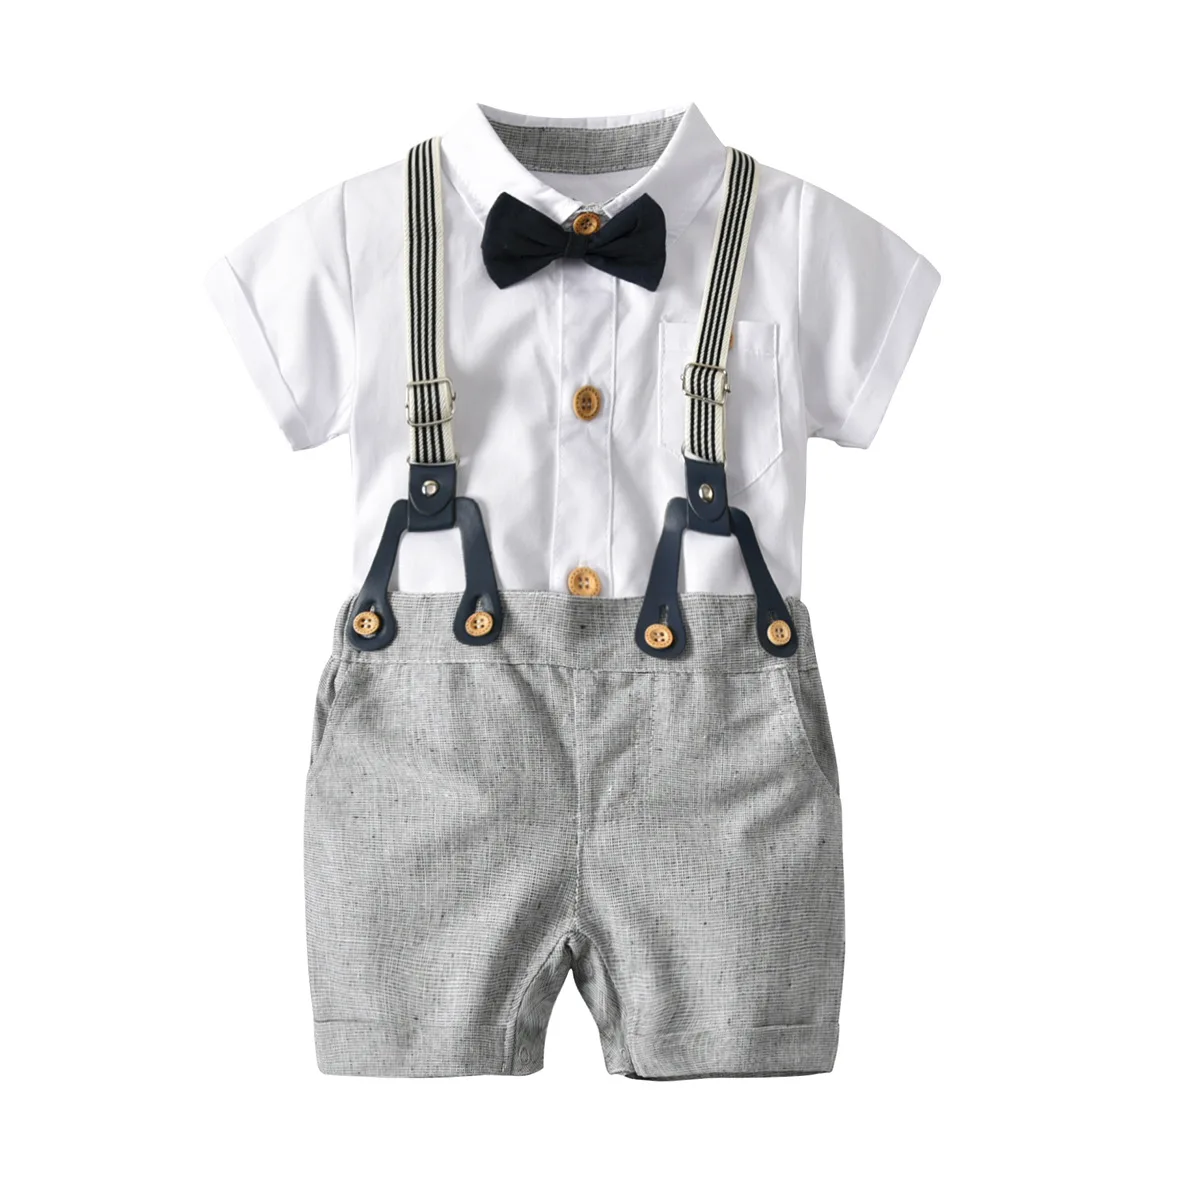 US Newborn Baby Boys Gentleman Outfits Formal Suit Bowtie Suspenders Shorts Set 